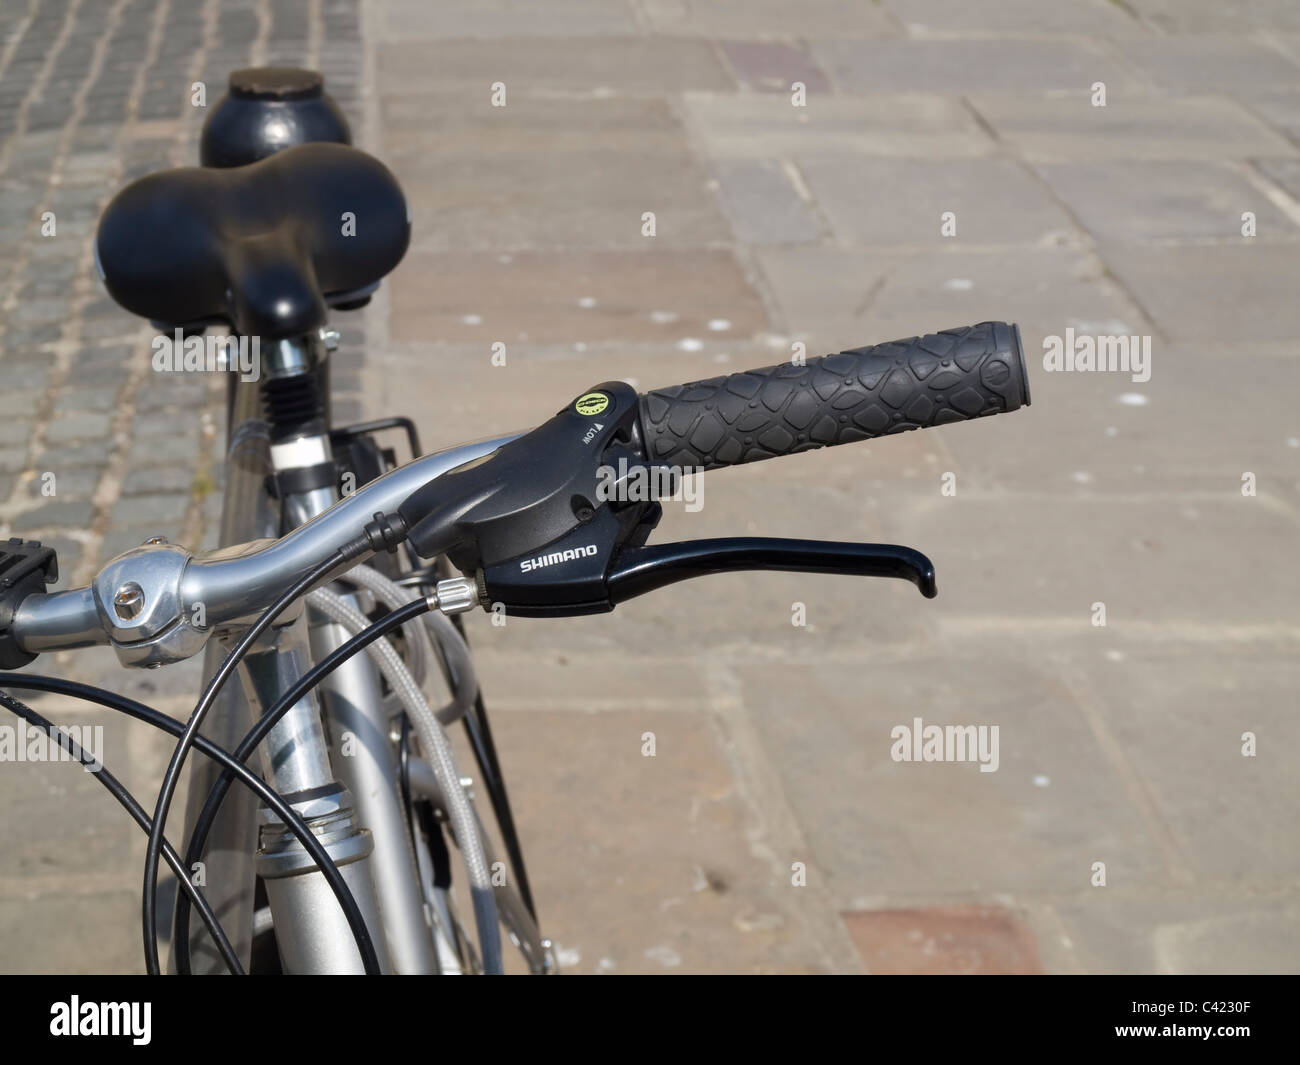 Shimano brake handle and Ci Deck Plus gear shifter on bicycle handle Stock  Photo - Alamy